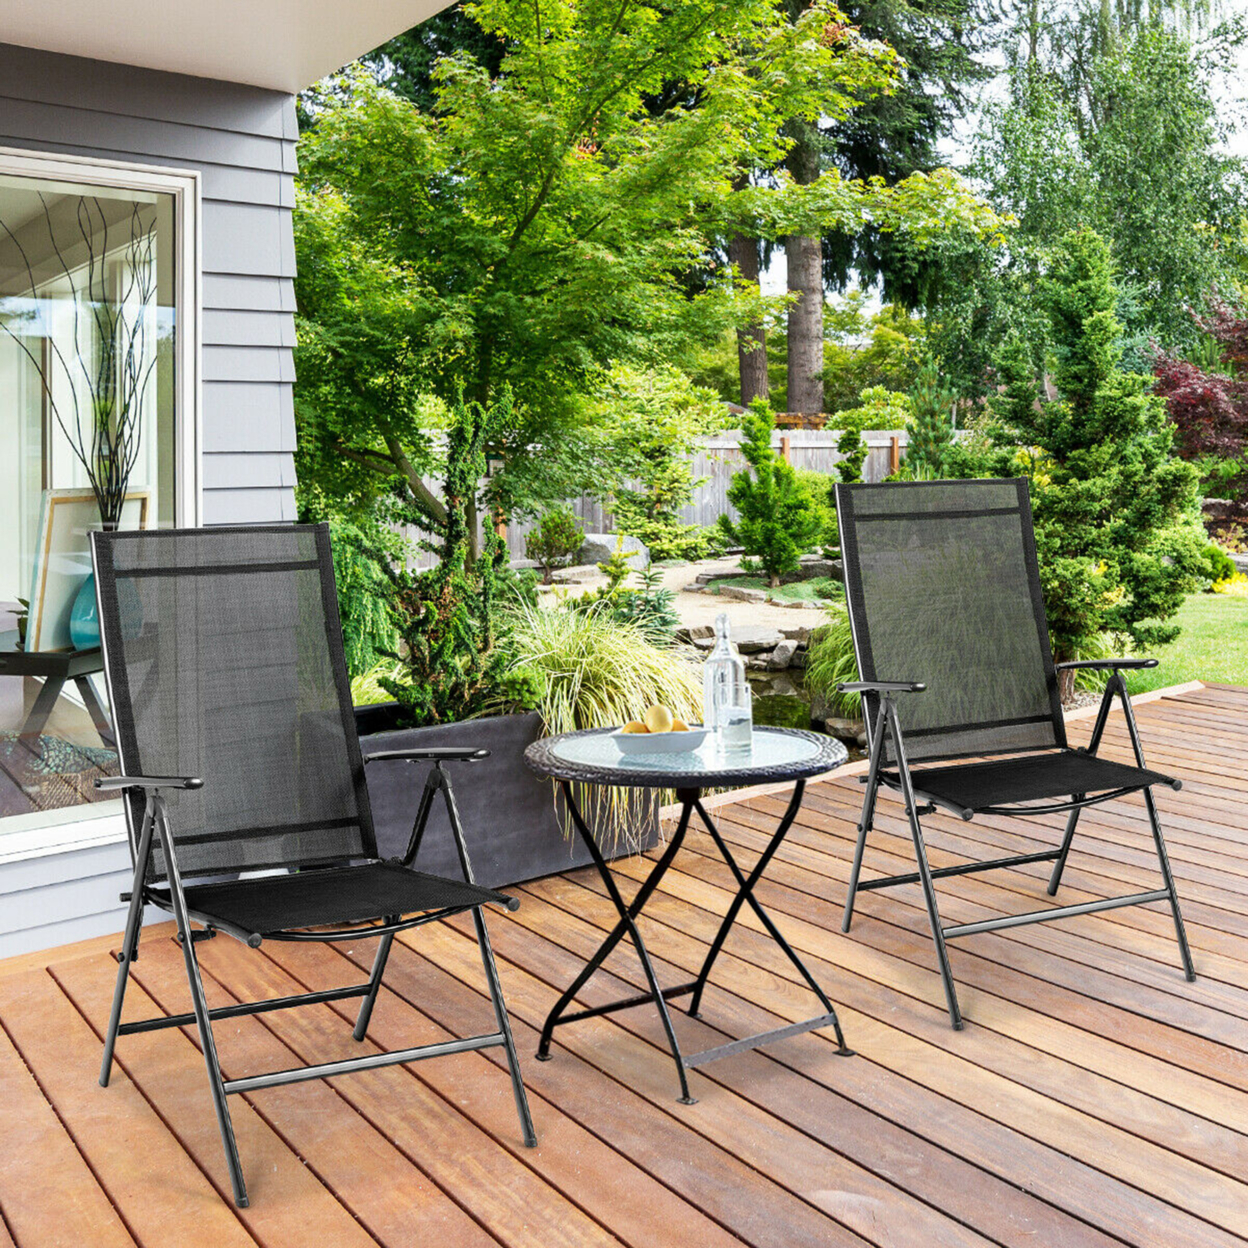 2PCS Folding Chair Patio Garden Outdoor W/ Steel Frame Adjustable Backrest